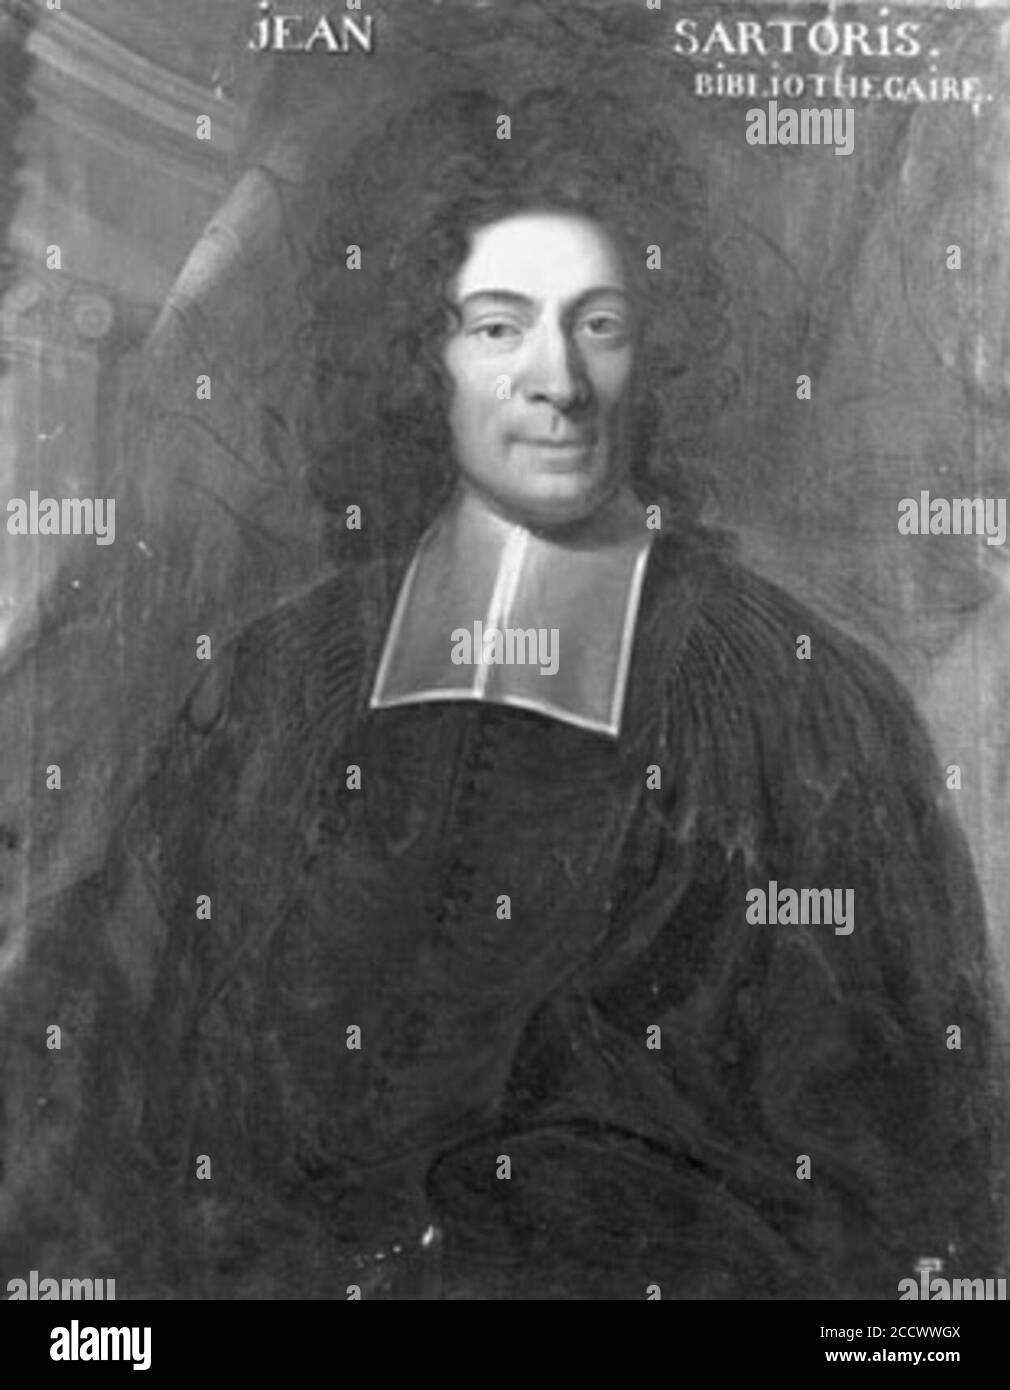 Jean Sartoris (1656-1721), théologien genevois, bibliothécaire. Foto Stock